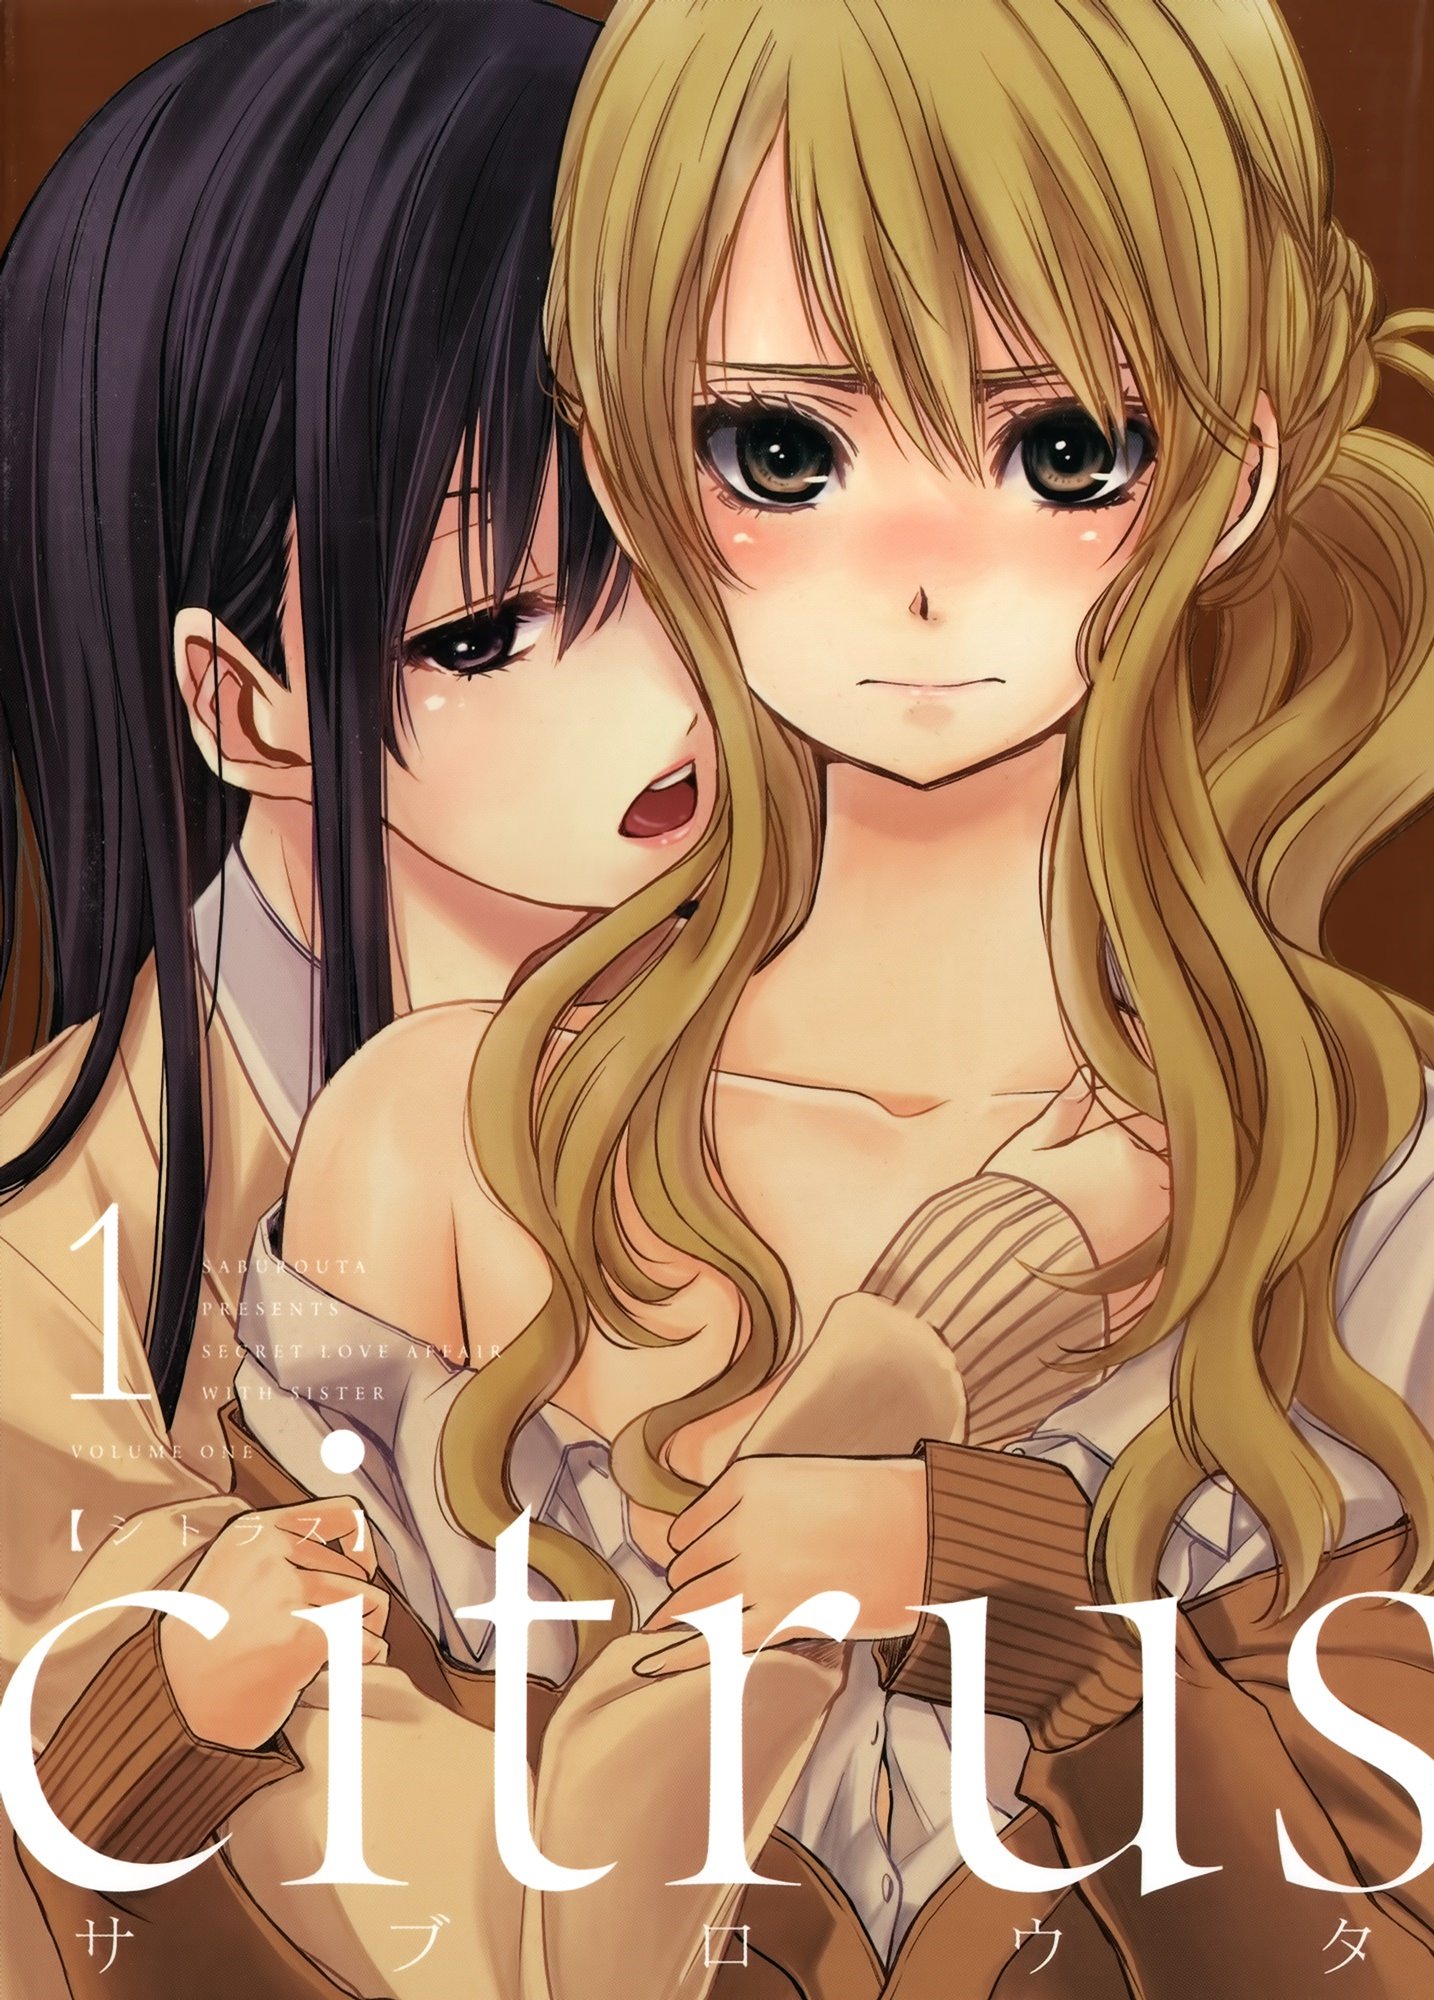 Manga | Citrus Wiki | Fandom